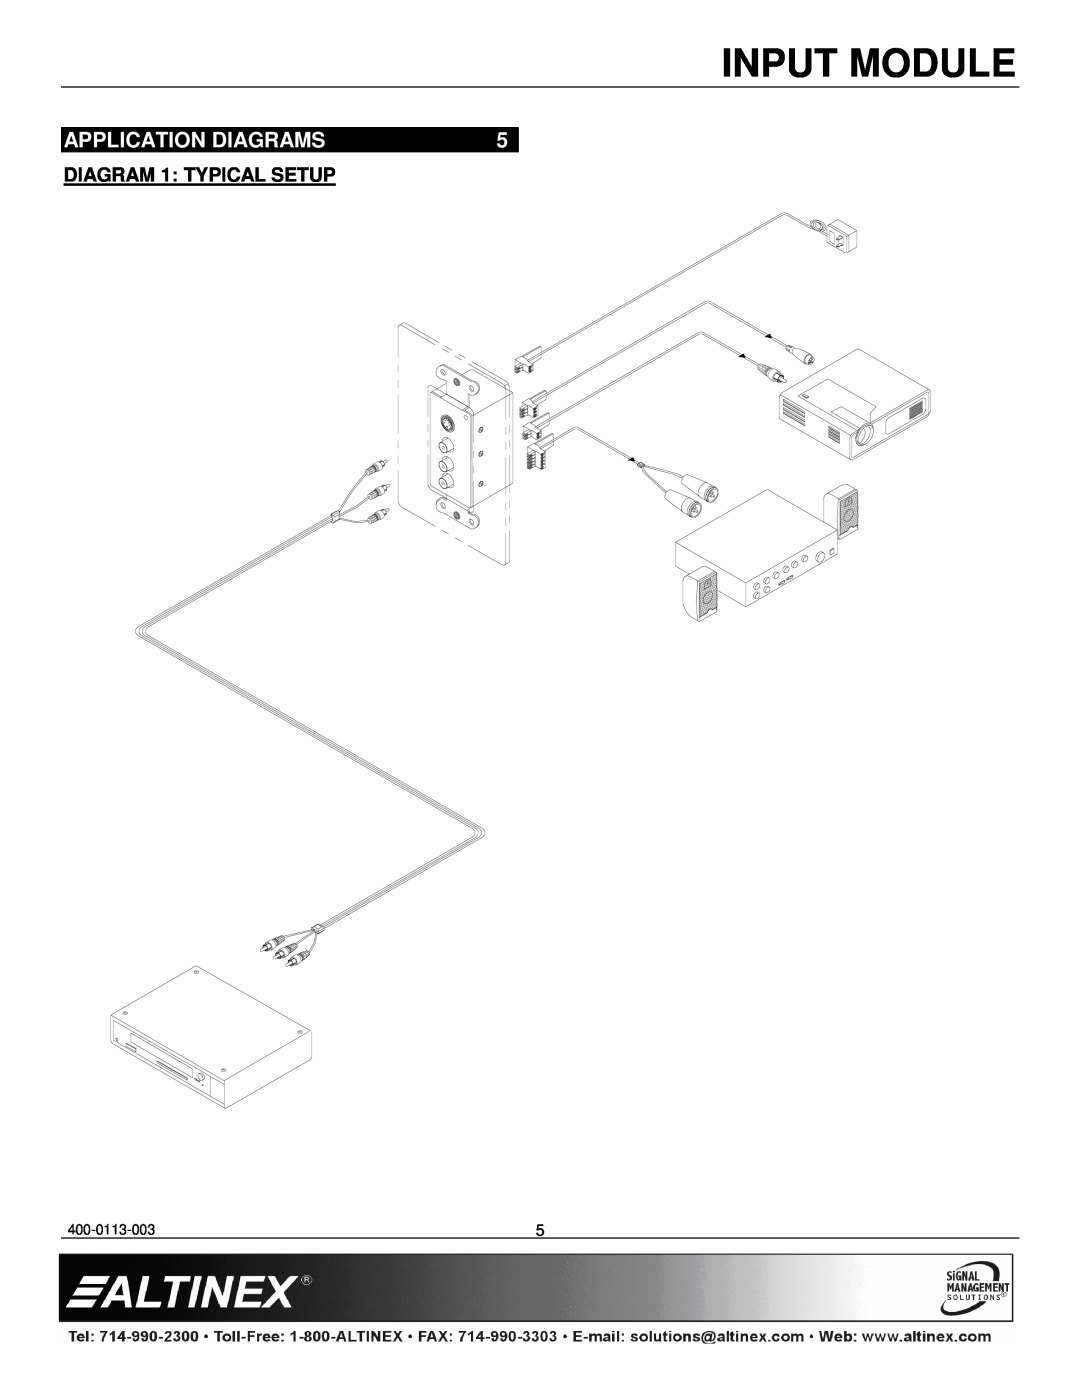 Altinex ISV3000-W manual Application Diagrams, Input Module, DIAGRAM 1 TYPICAL SETUP, 400-0113-003 